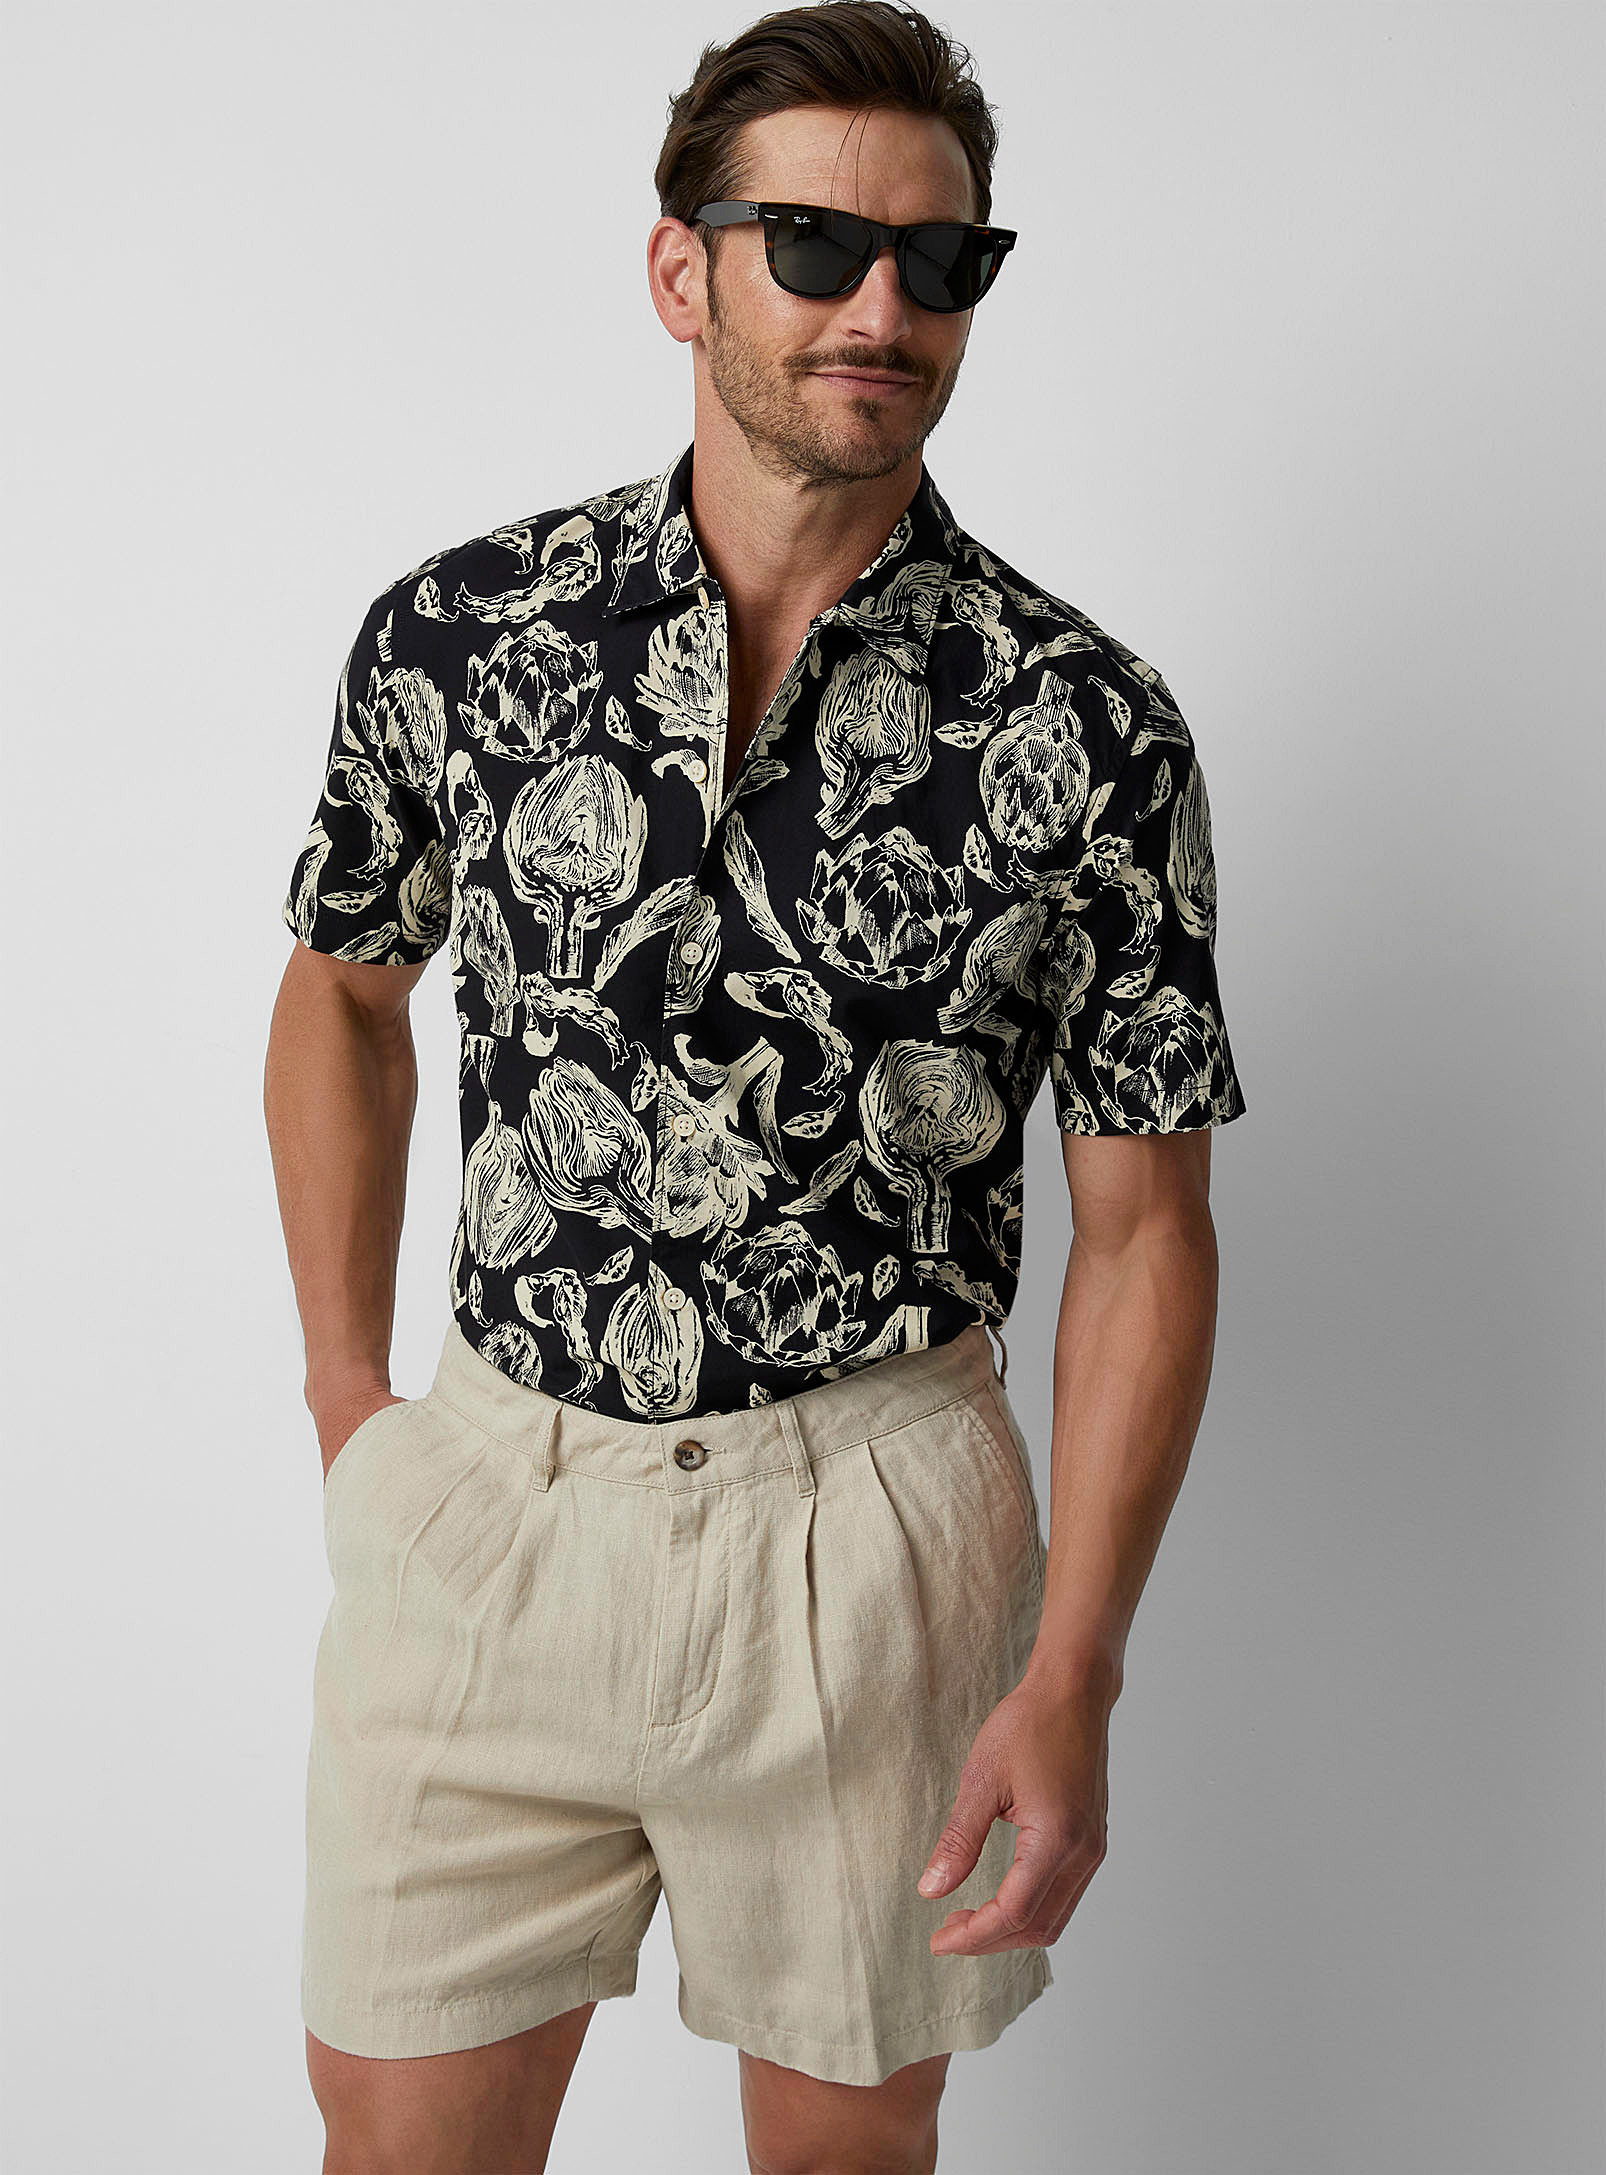 Marc O'Polo shirt - Men's Contrasting floral